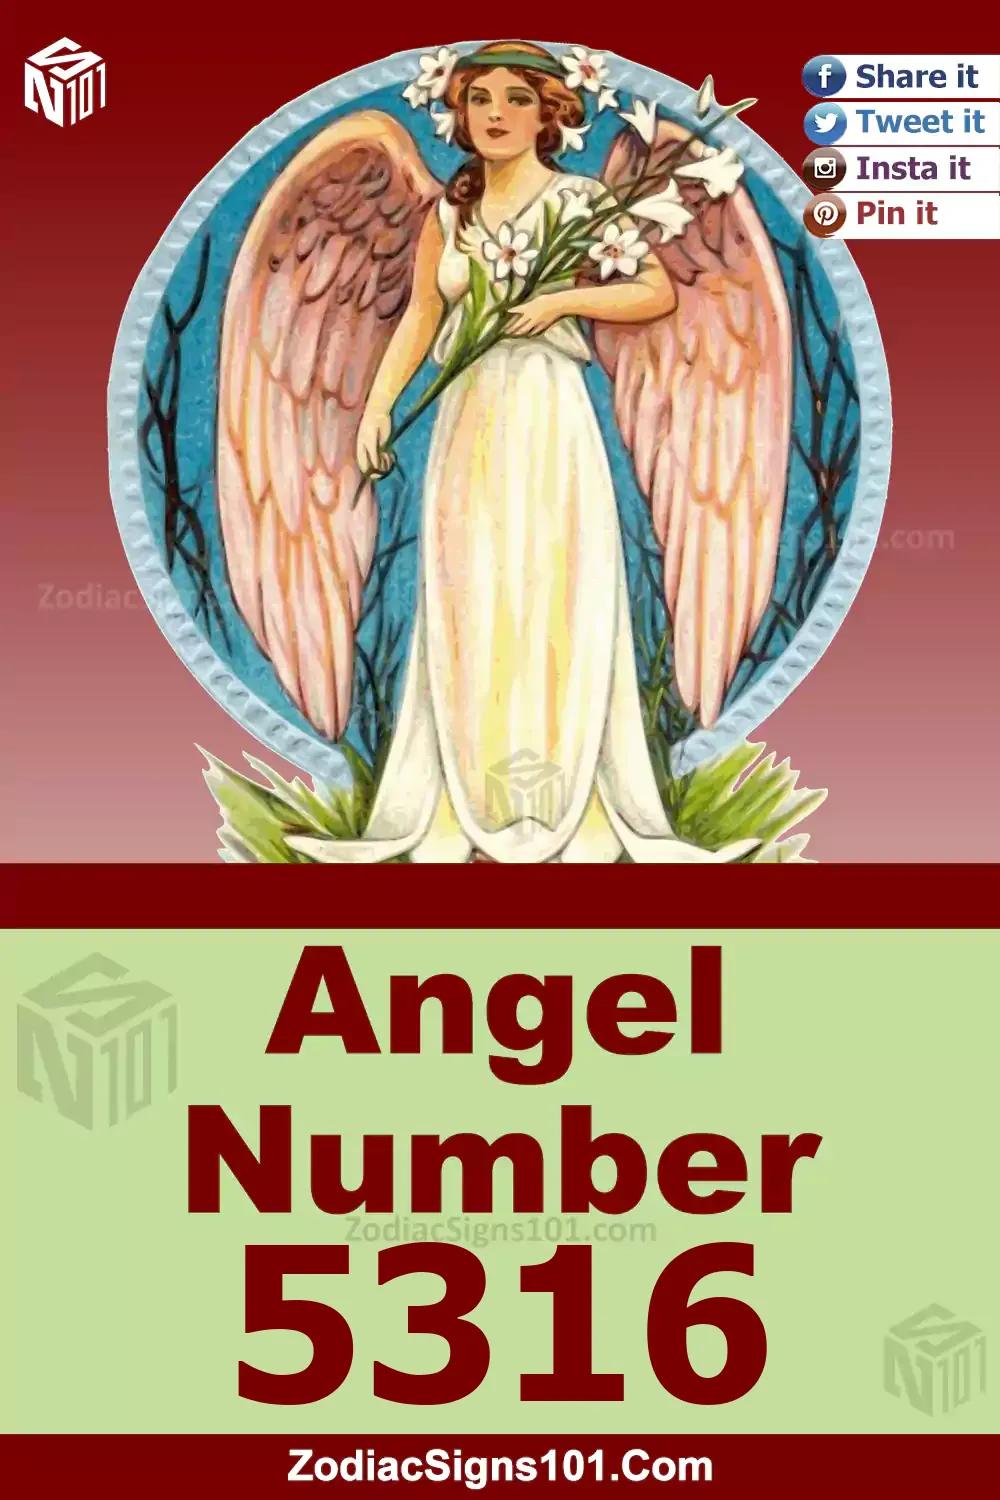 5316-Angel-Number-Meaning.jpg